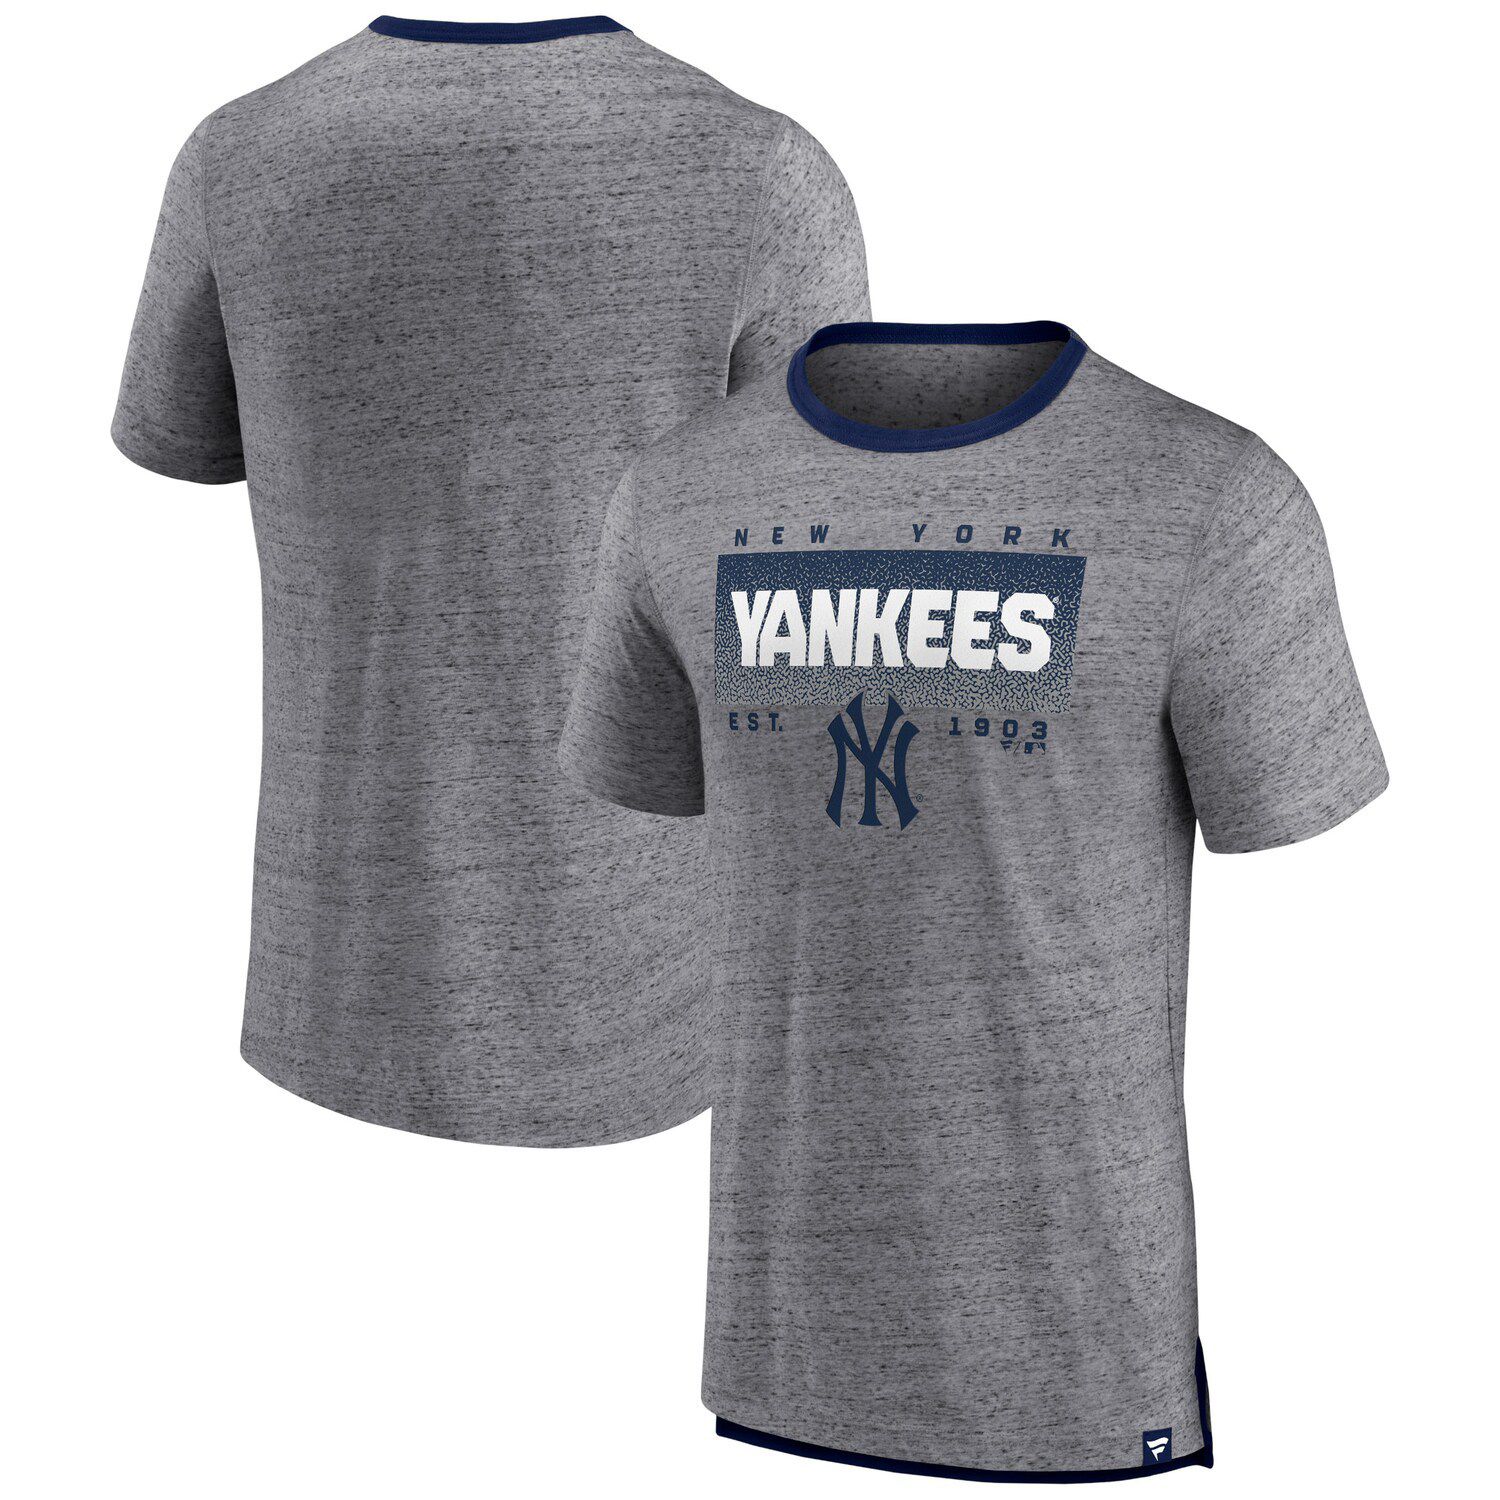 New York Yankees Button Down Shirt Men XL Adult Blue Reyn Spooner MLB  Baseball